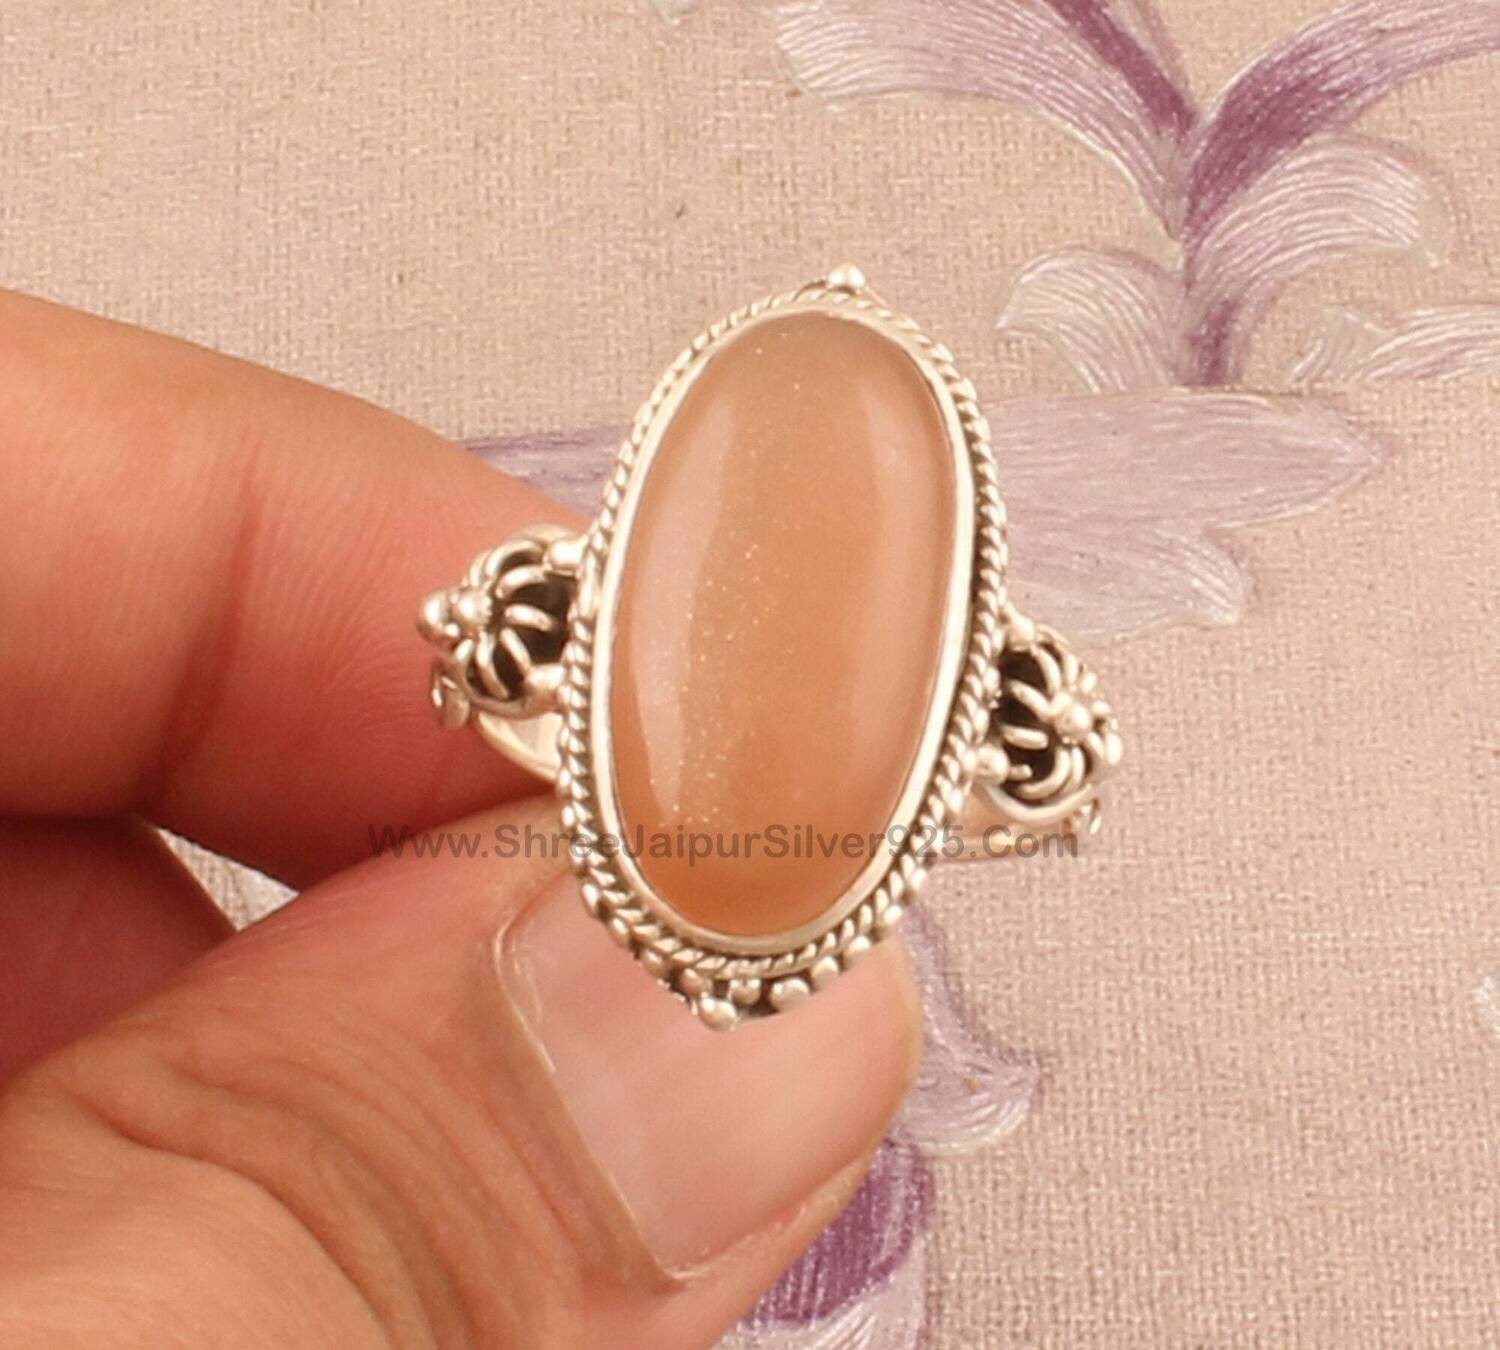 Peach Moonstone Gemstone Ring, 925 Sterling Silver Peach Moonstone Oval Shape Gemstone Ring, Handmade Stone Ring, Christmas Gift For Women